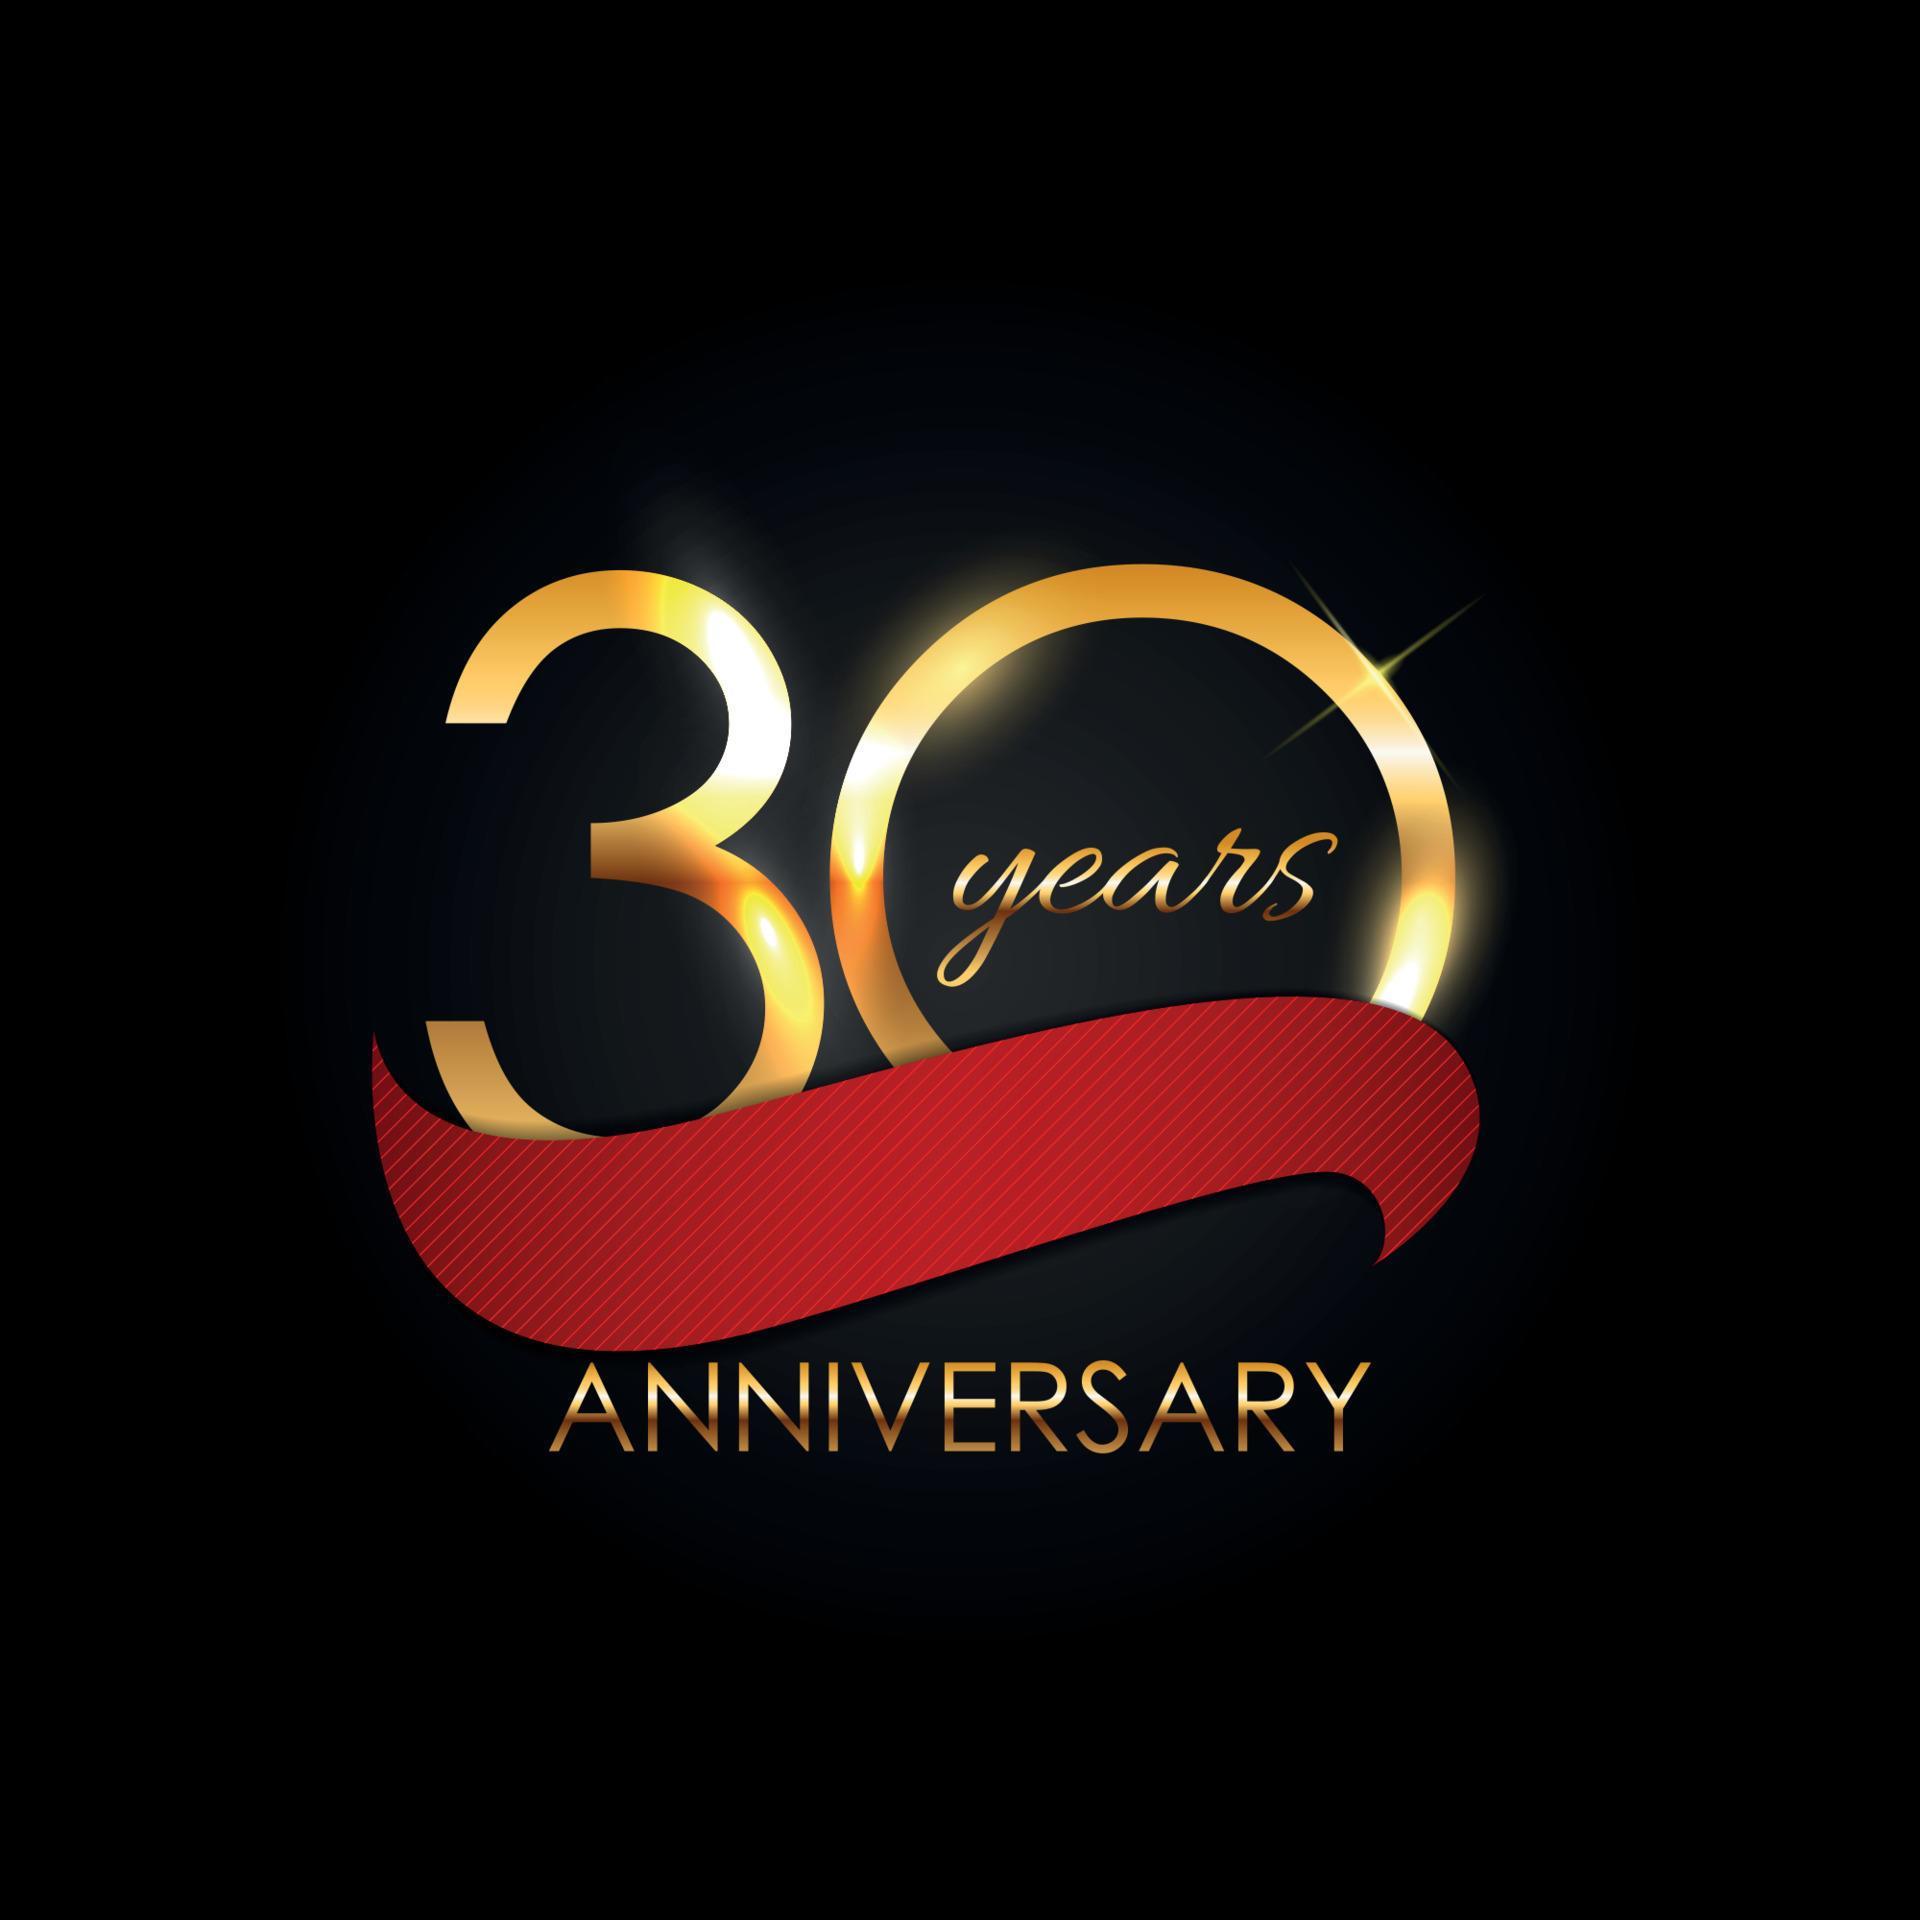 Template Logo 30 Years Anniversary Vector Illustration 4554701 Vector ...